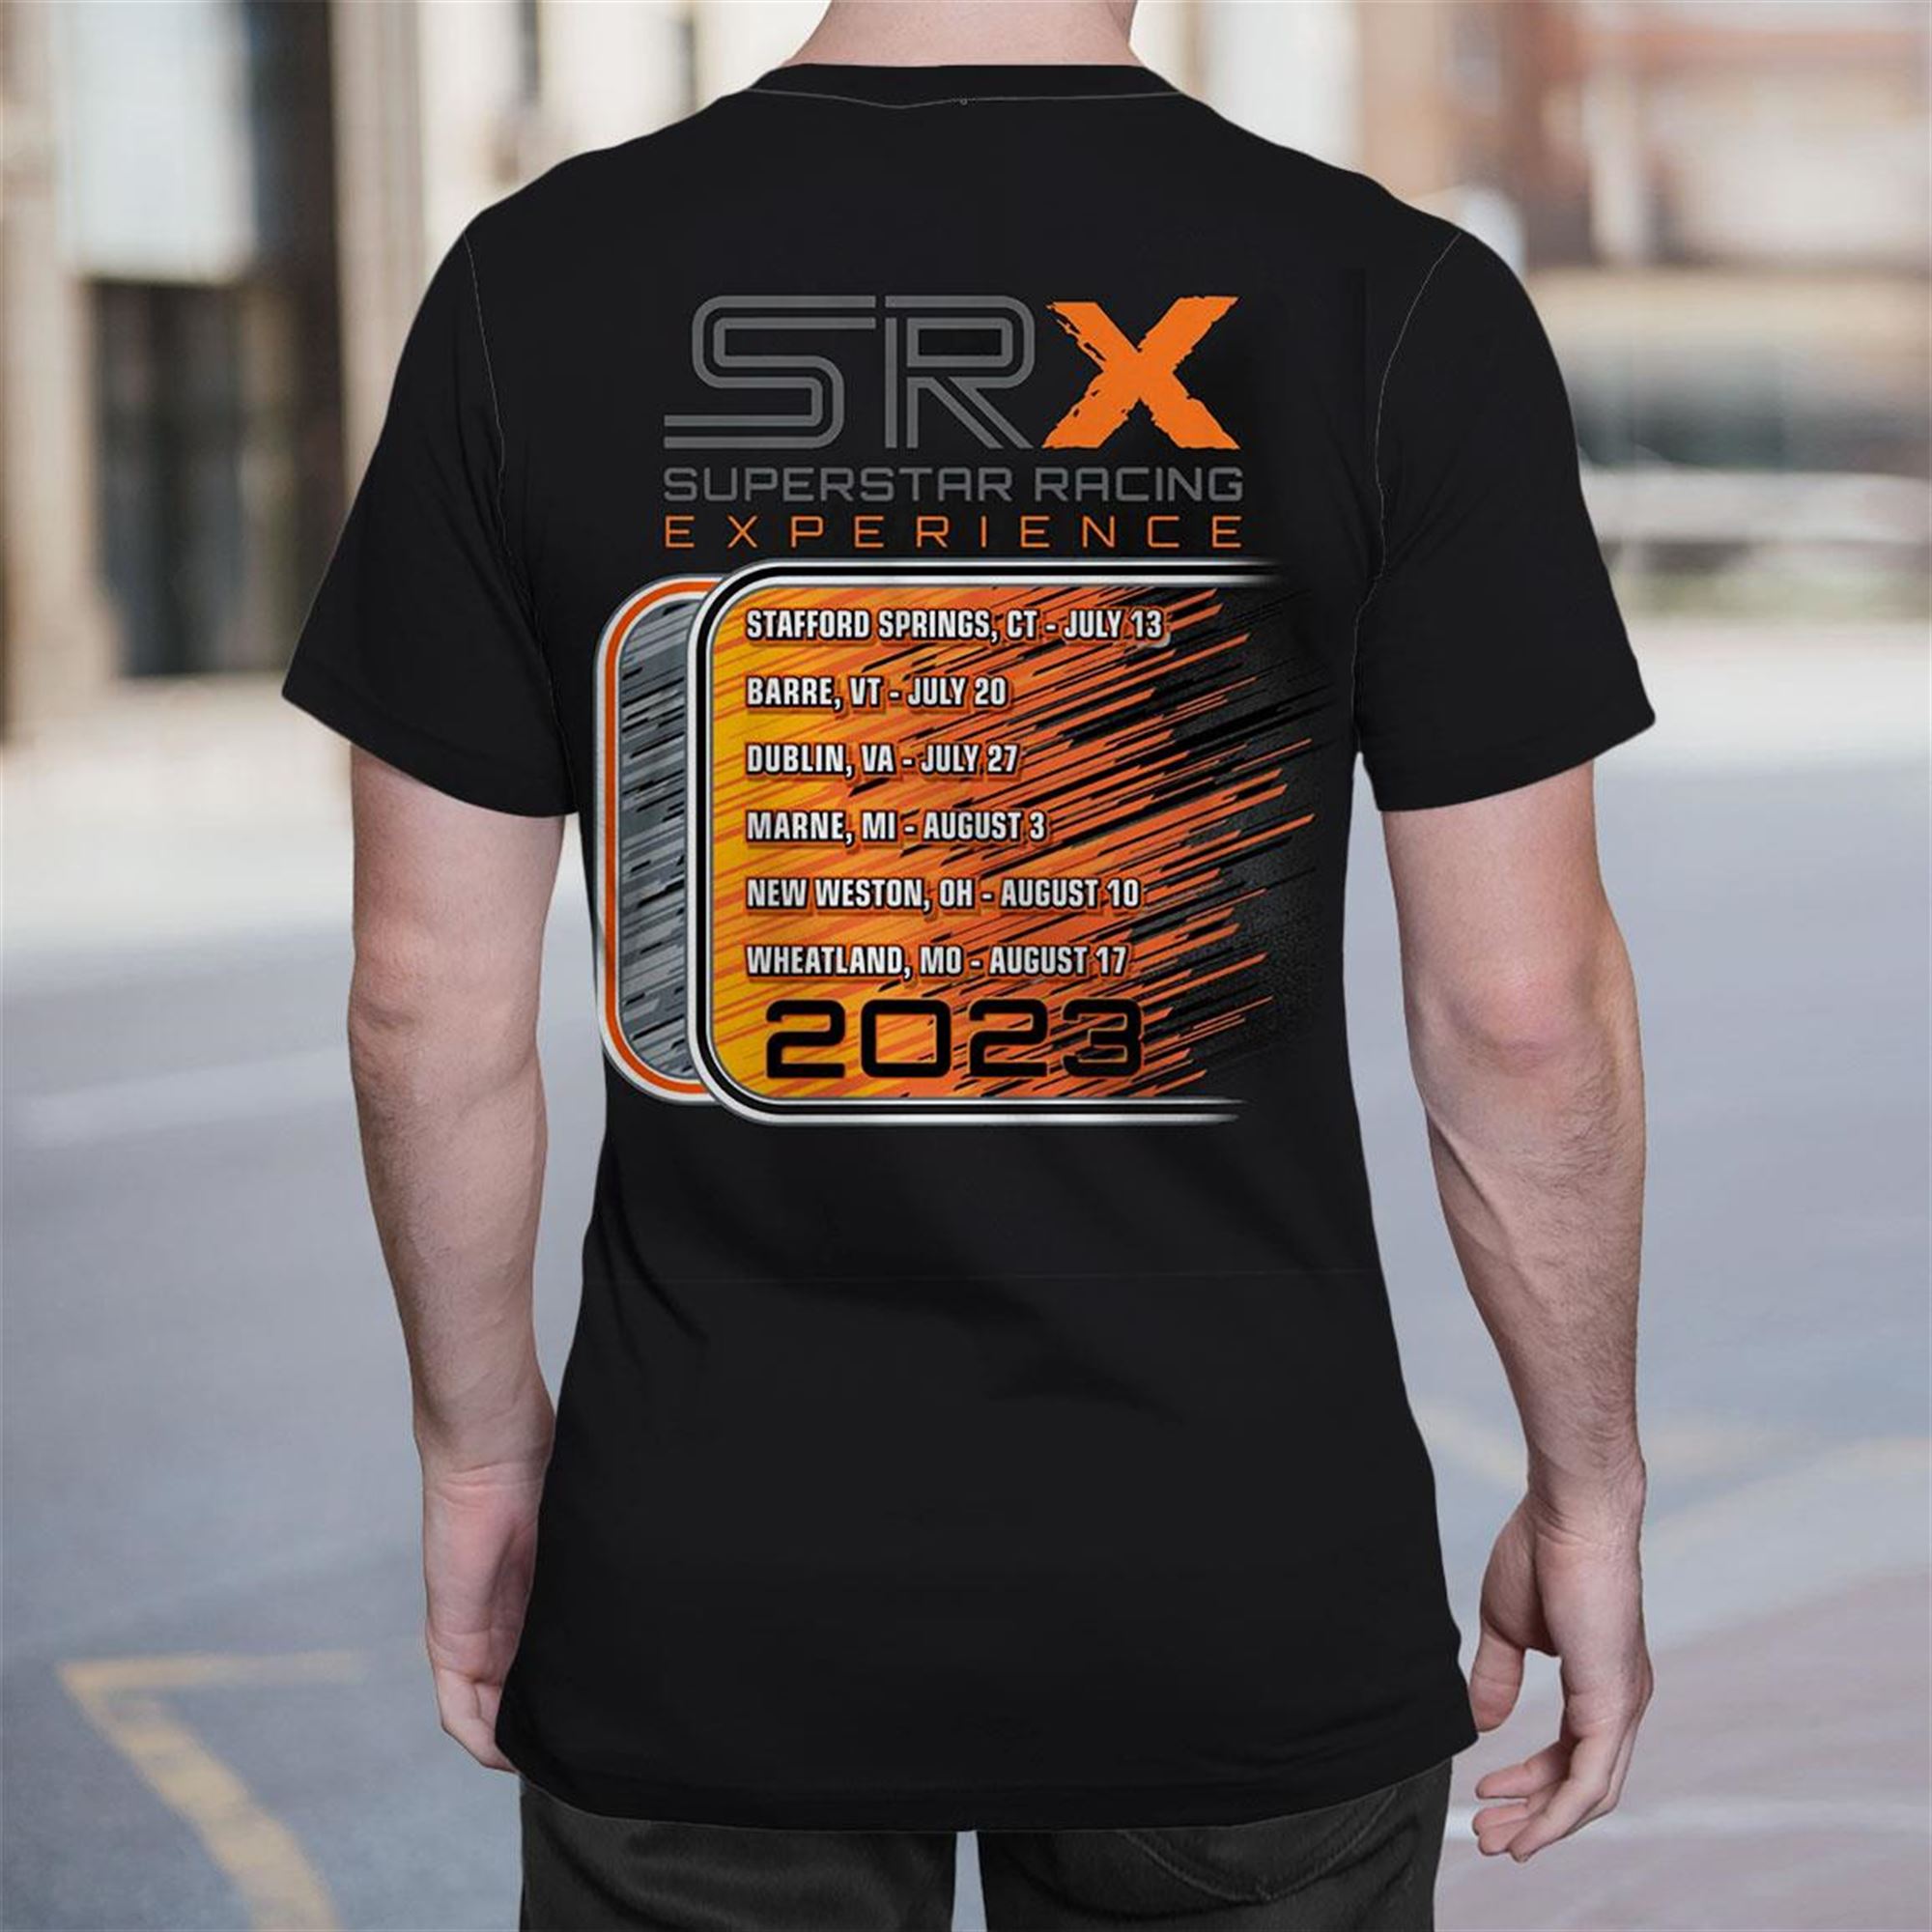 Schedule Srx Superstar Racing Experience Srx Rancingshop Tee Shirt